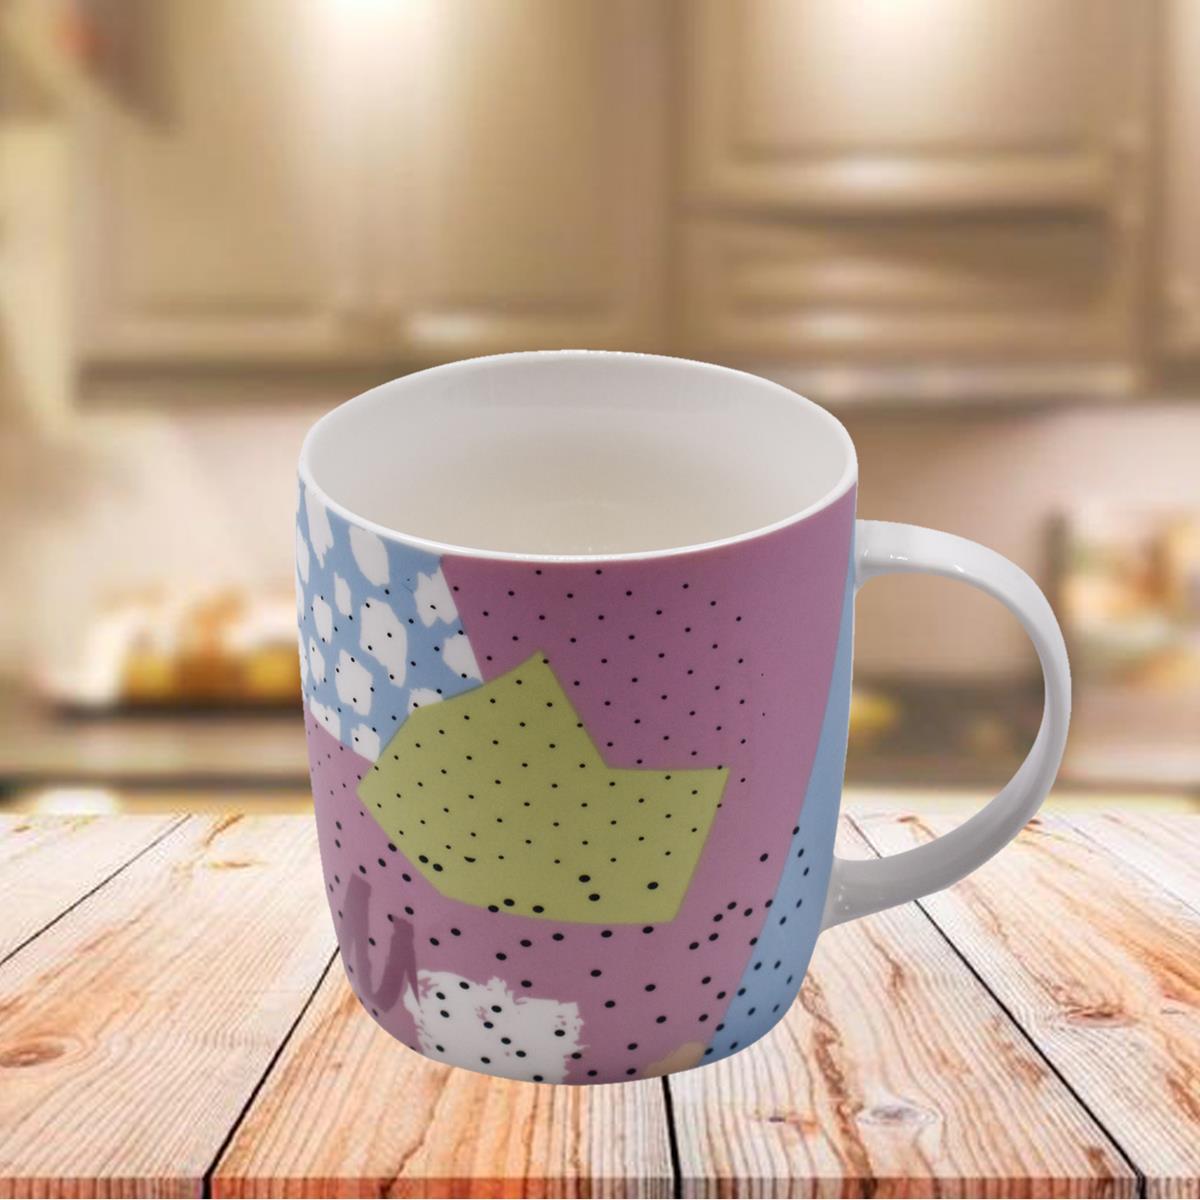 Ceramic Coffee or Tea Mug with handle - 325ml (R4901-A)